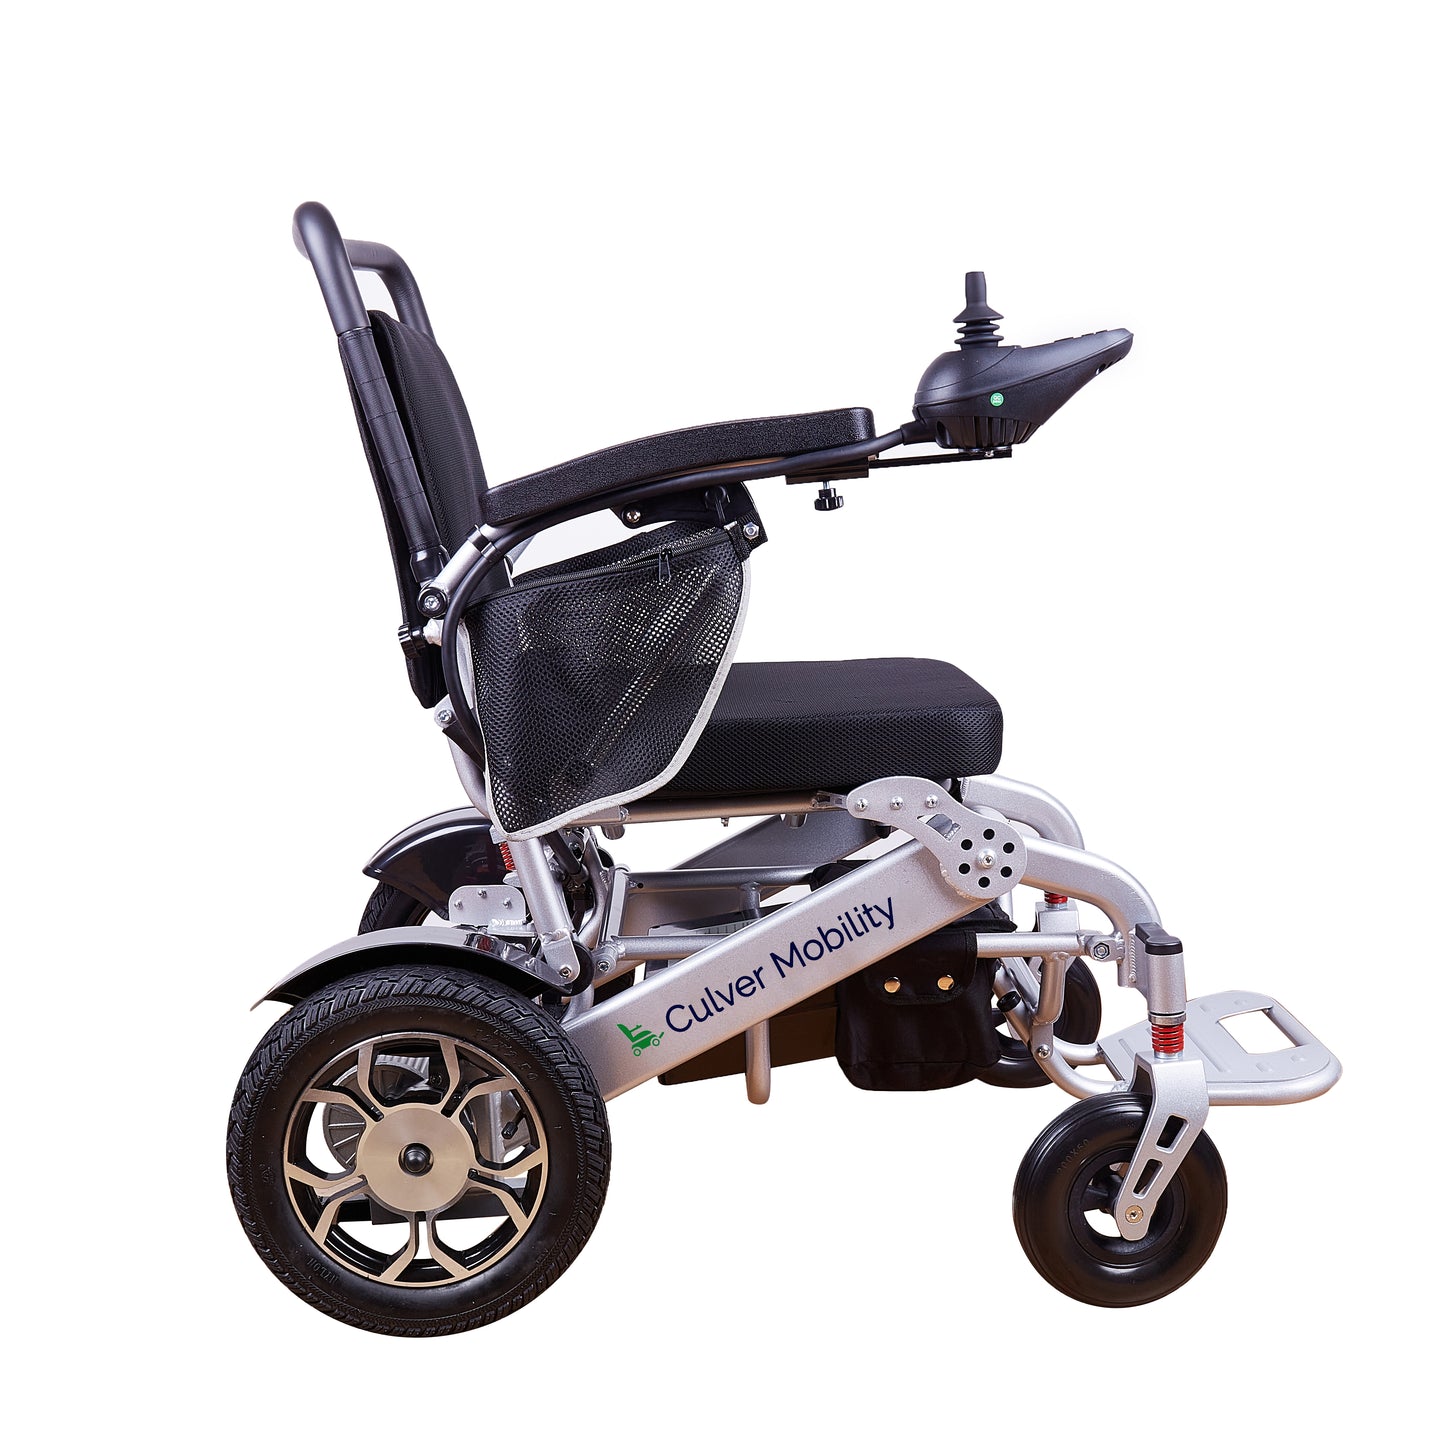 Heavy Duty Electric Wheelchair | Folding Wheelchair | Culver Mobility